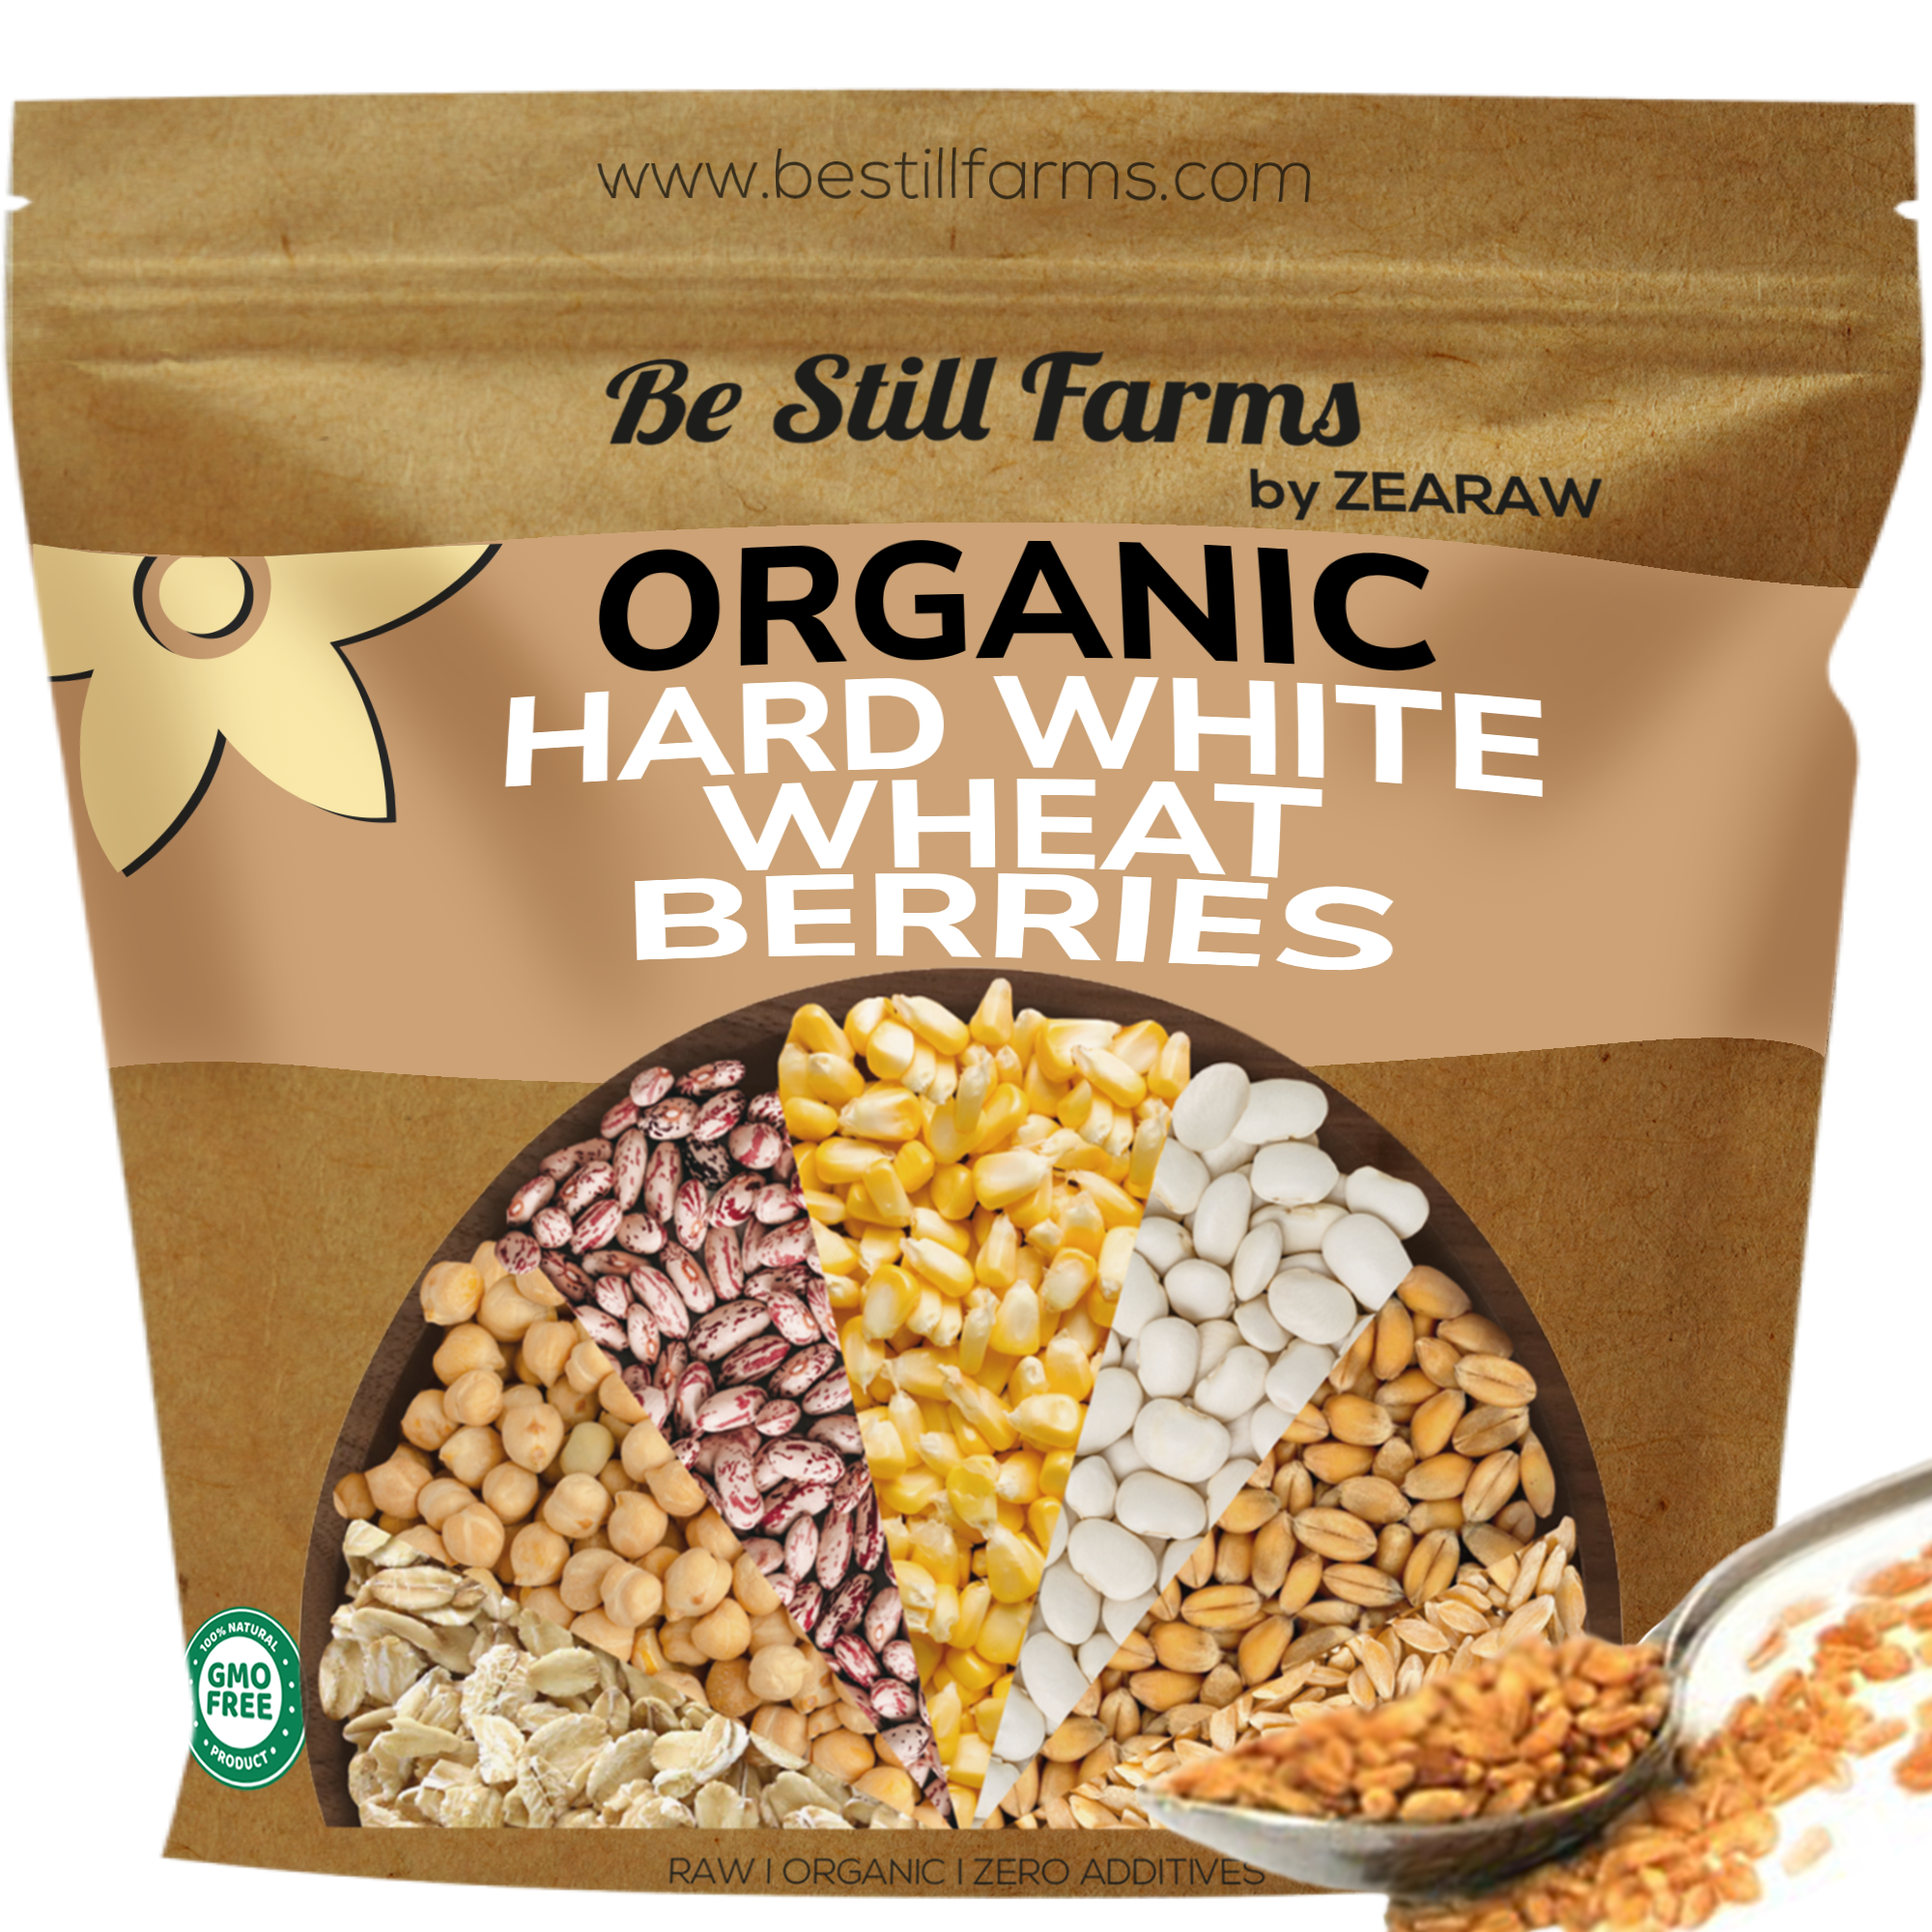 Organic Hard White Wheat Berries - Be Still Farms